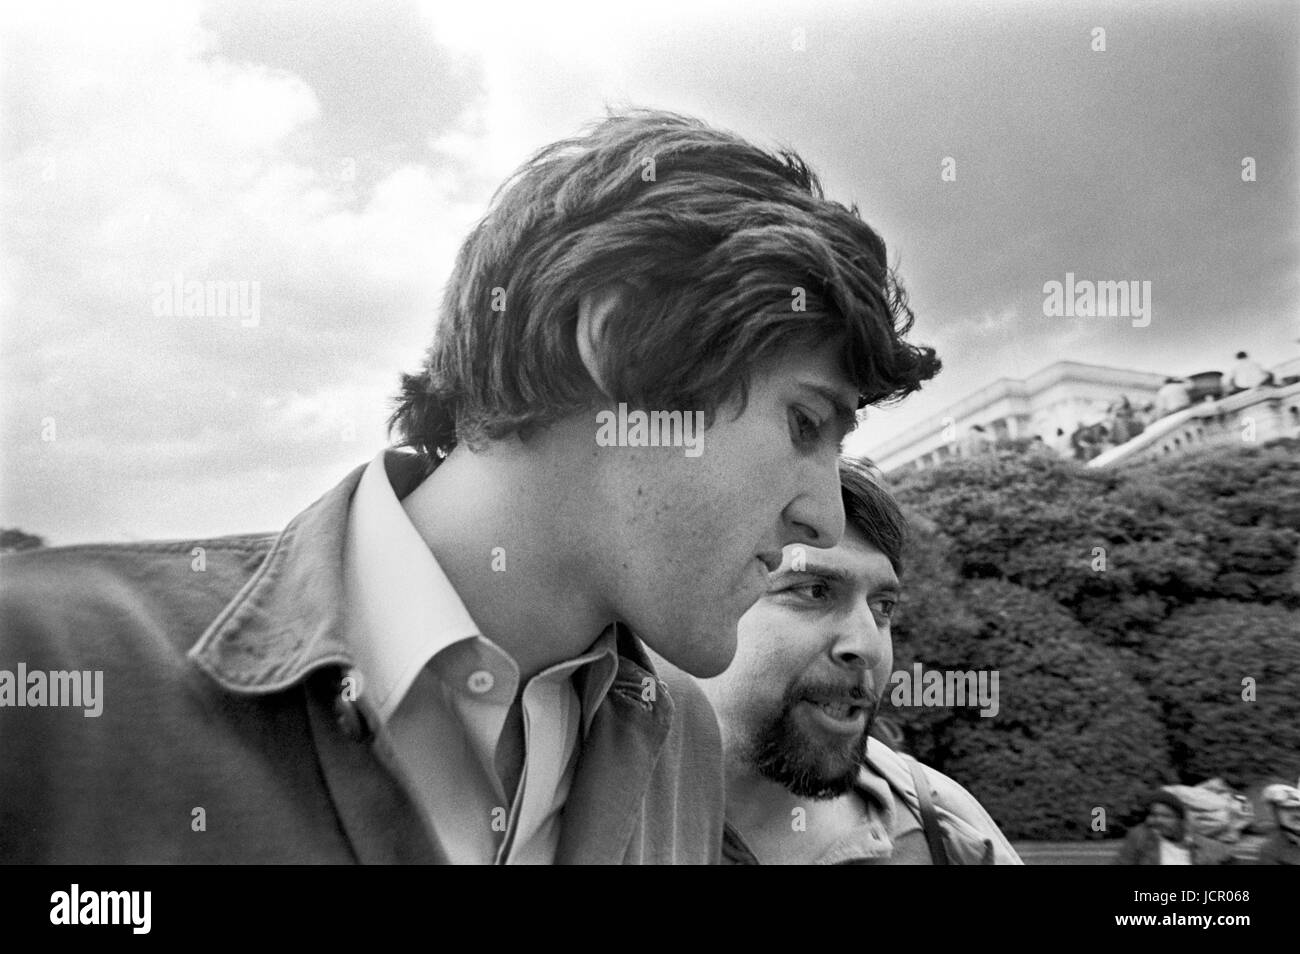 On April 22, 1971, Vietnam veteran Lt. John Kerry at the 1971 Mayday antiwar demonstration at the US Capitol. Stock Photo